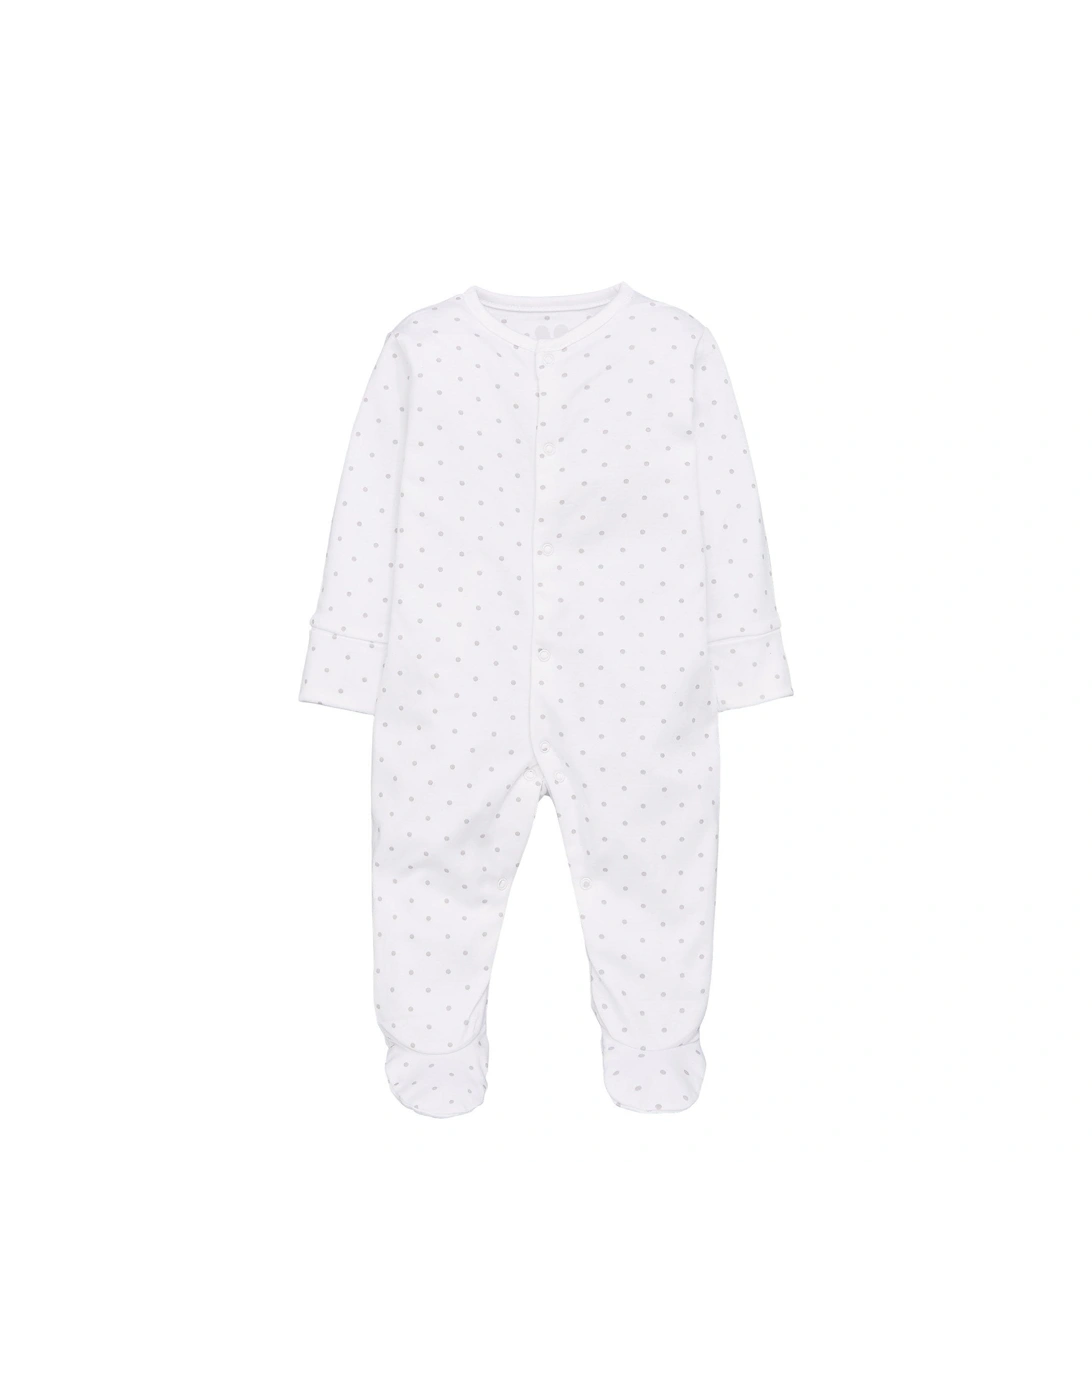 Baby Unisex 3 Pack Essentials Sleepsuits - White